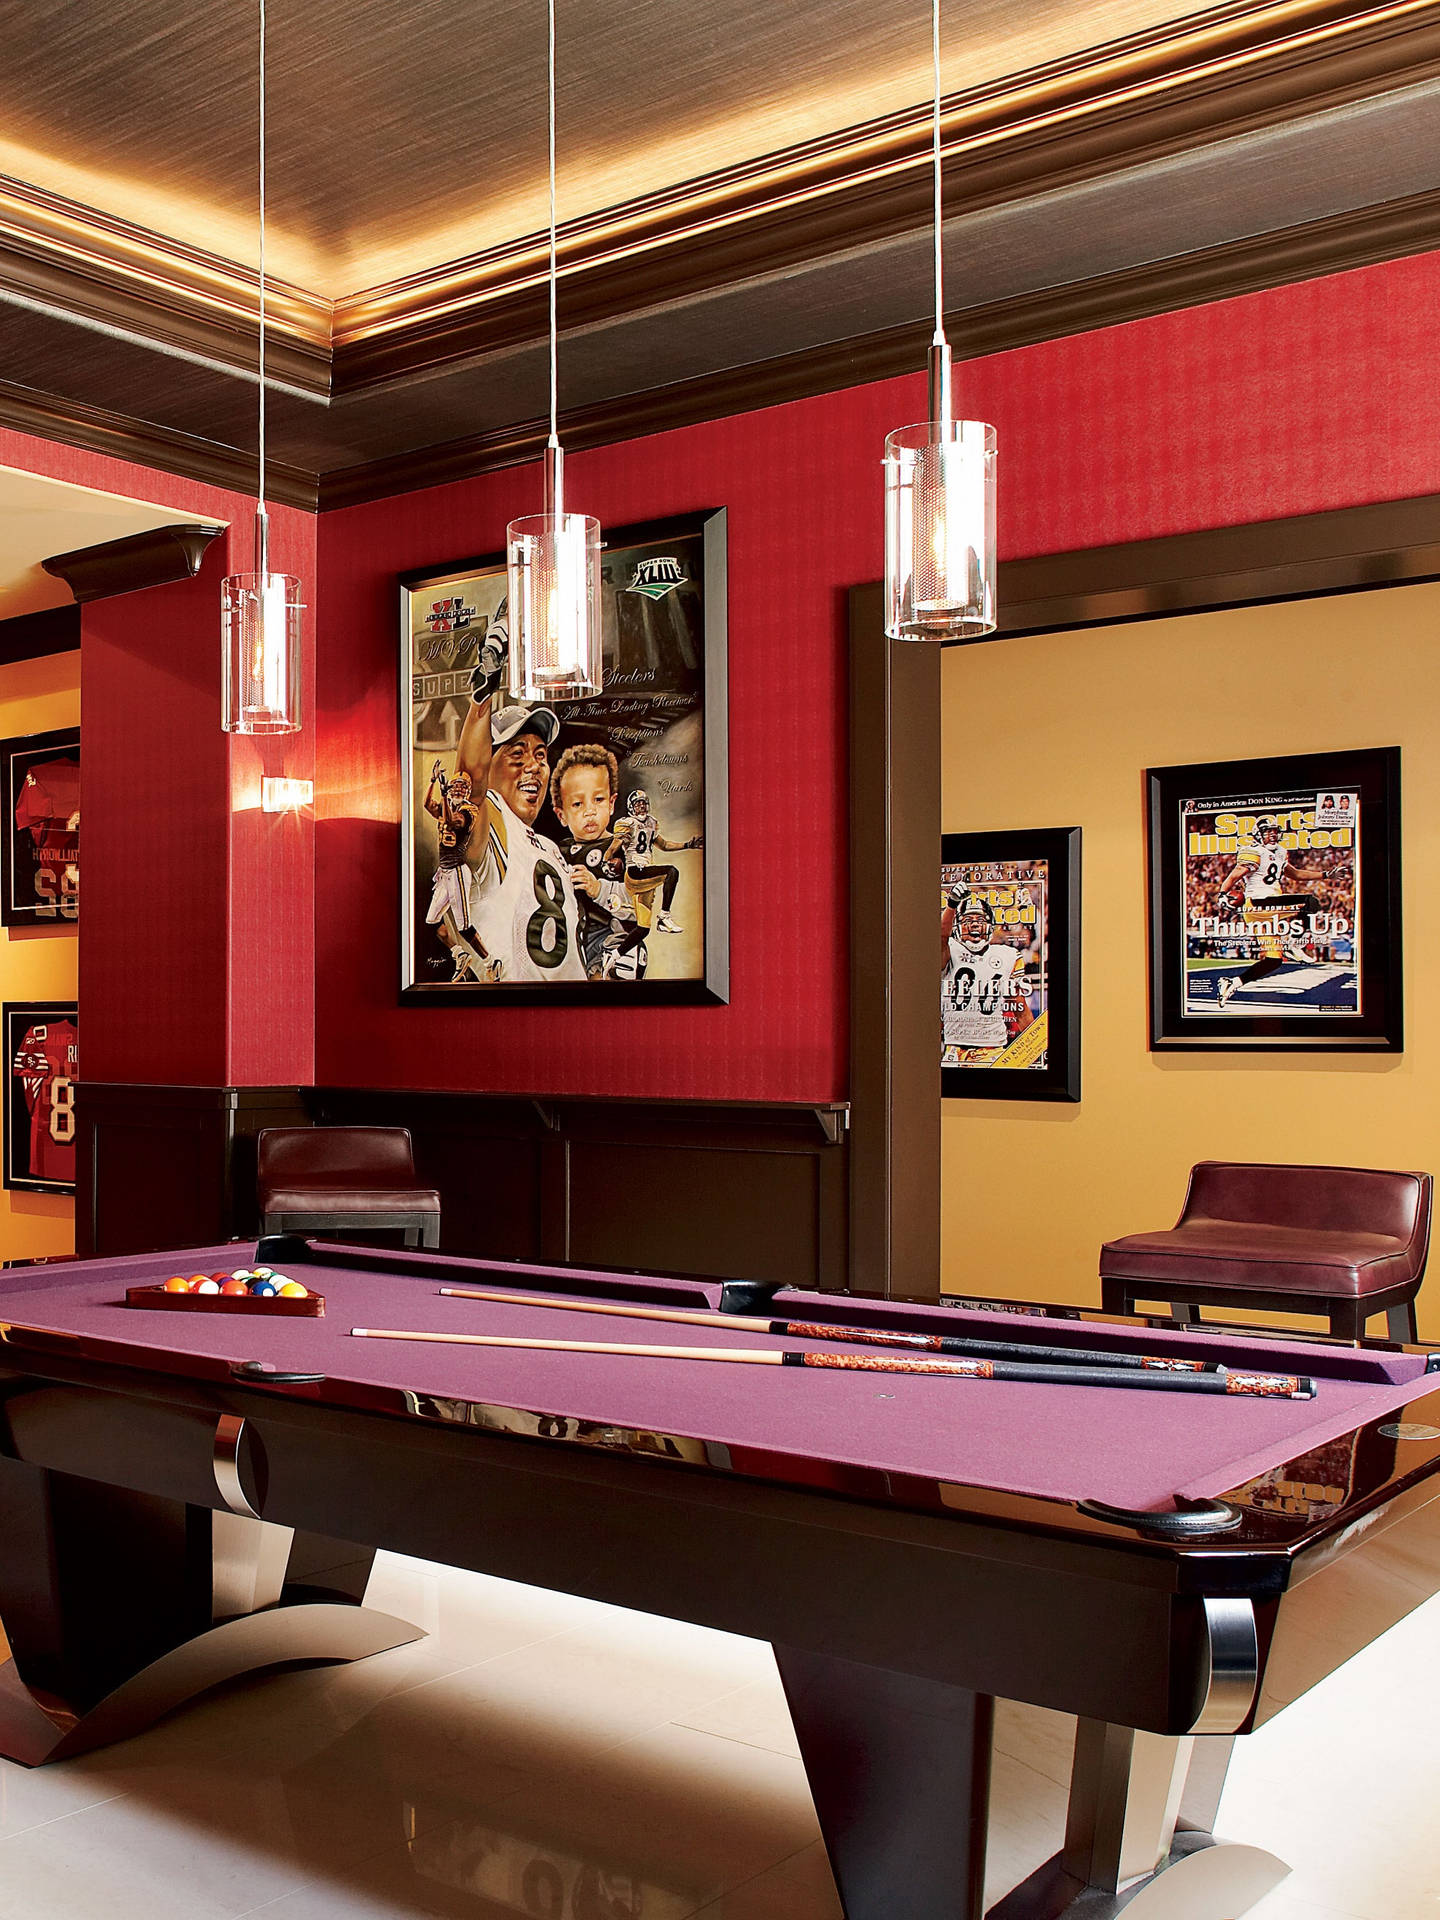 Download Billiards Purple Pool Table In Red Room Wallpaper | Wallpapers.com